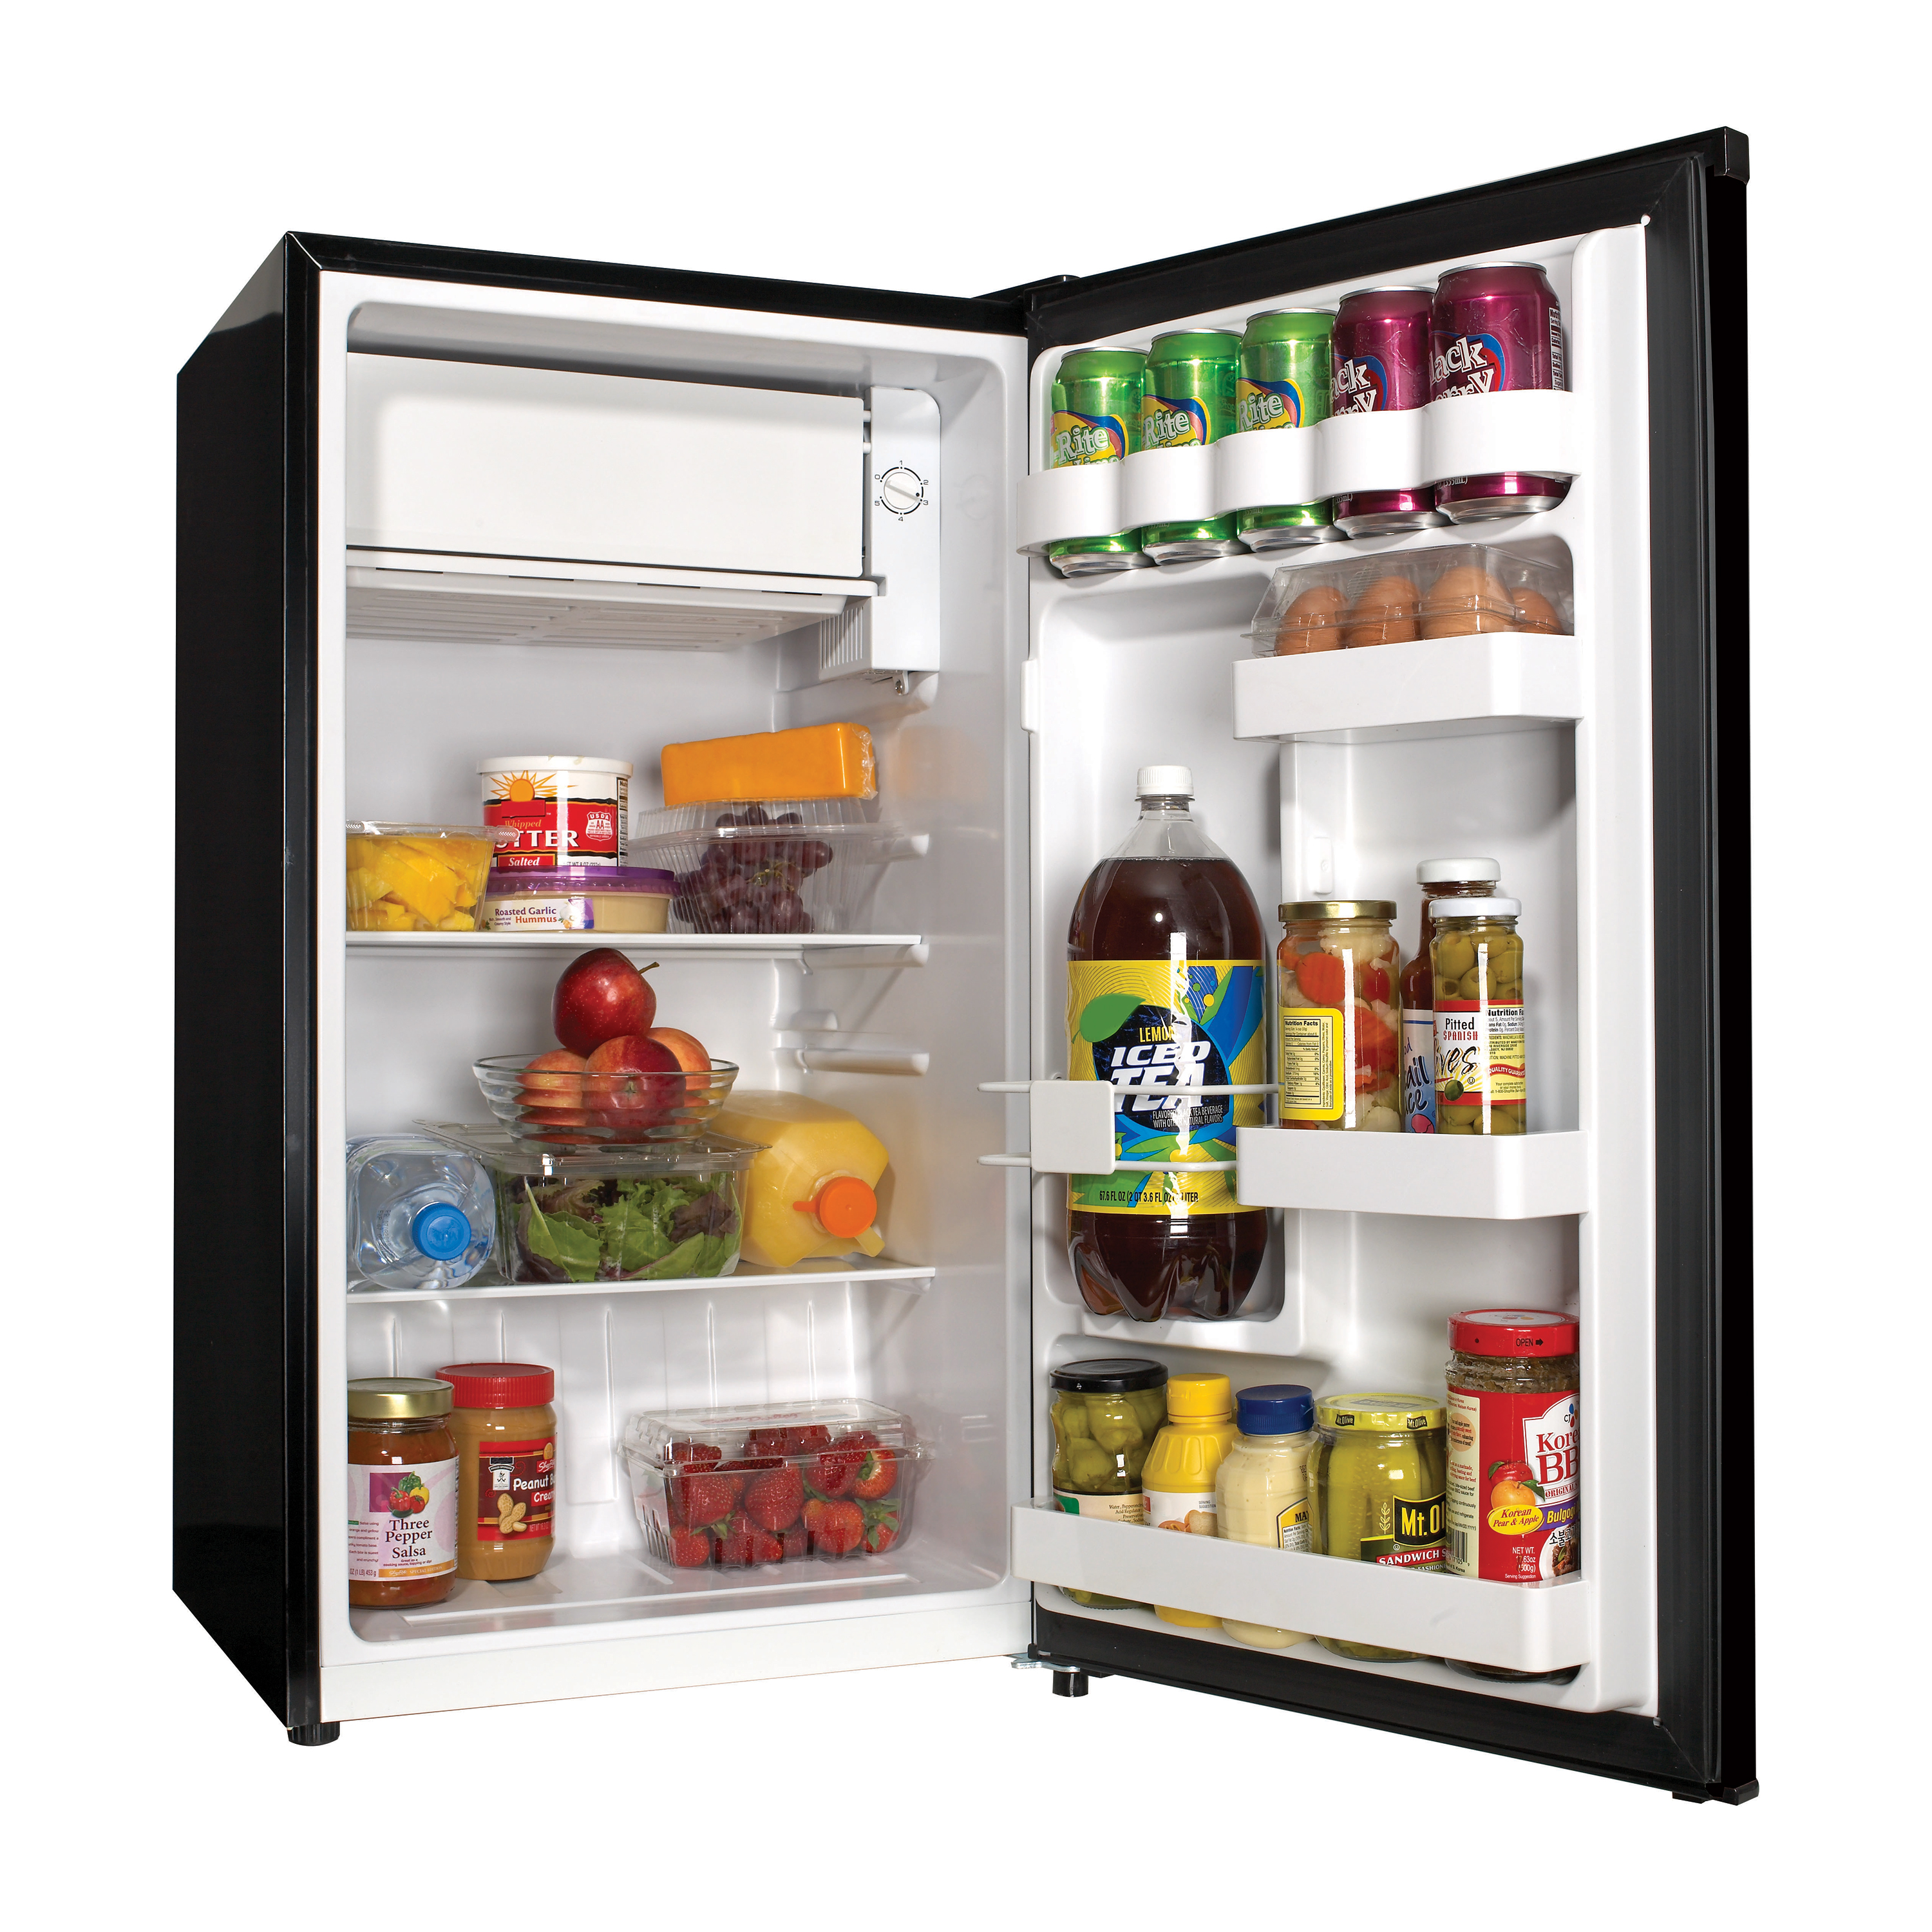 Haier 3.3 Cu Ft Single Door Compact Refrigerator HC33SW20RB, Black - image 3 of 4